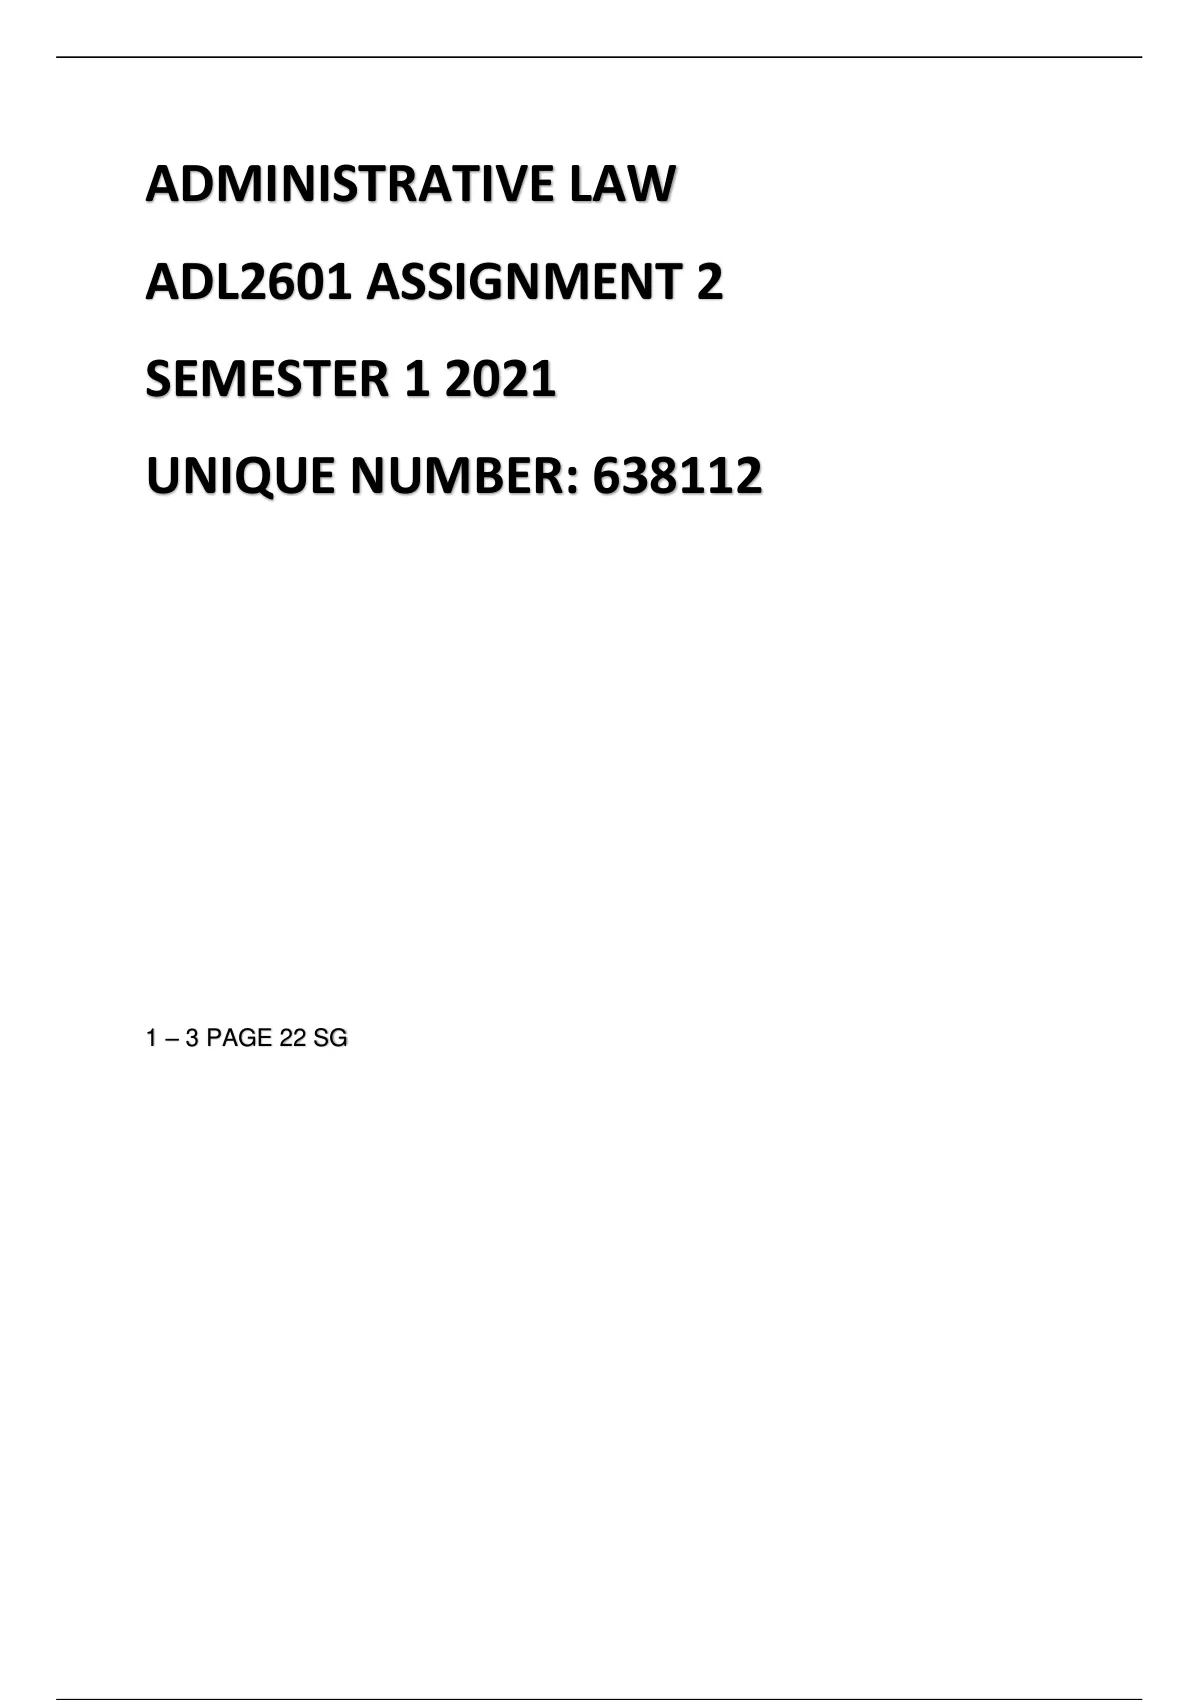 adl2601 assignment 1 2021